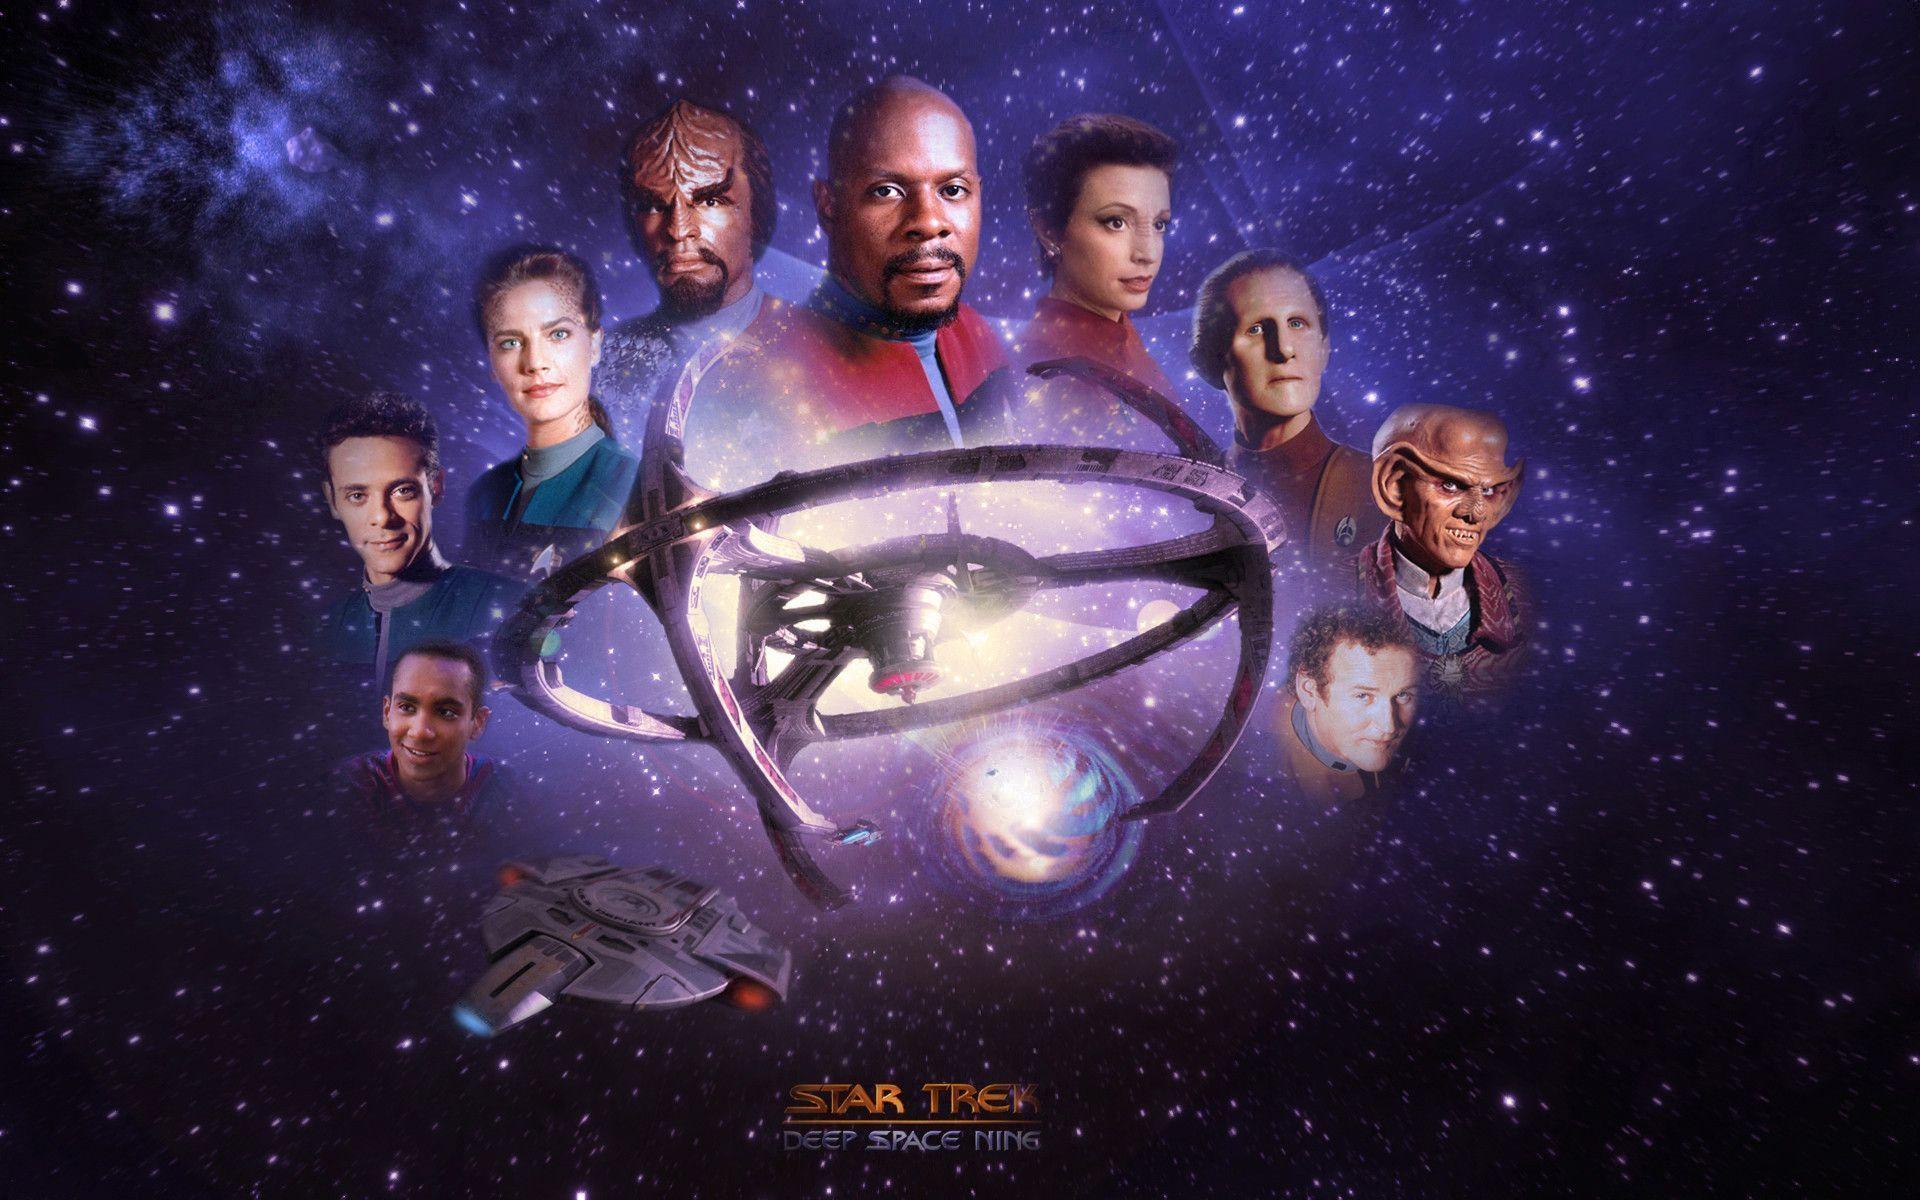 TV Show Star Trek: Deep Space Nine Wallpaper 1920x1200 px Free